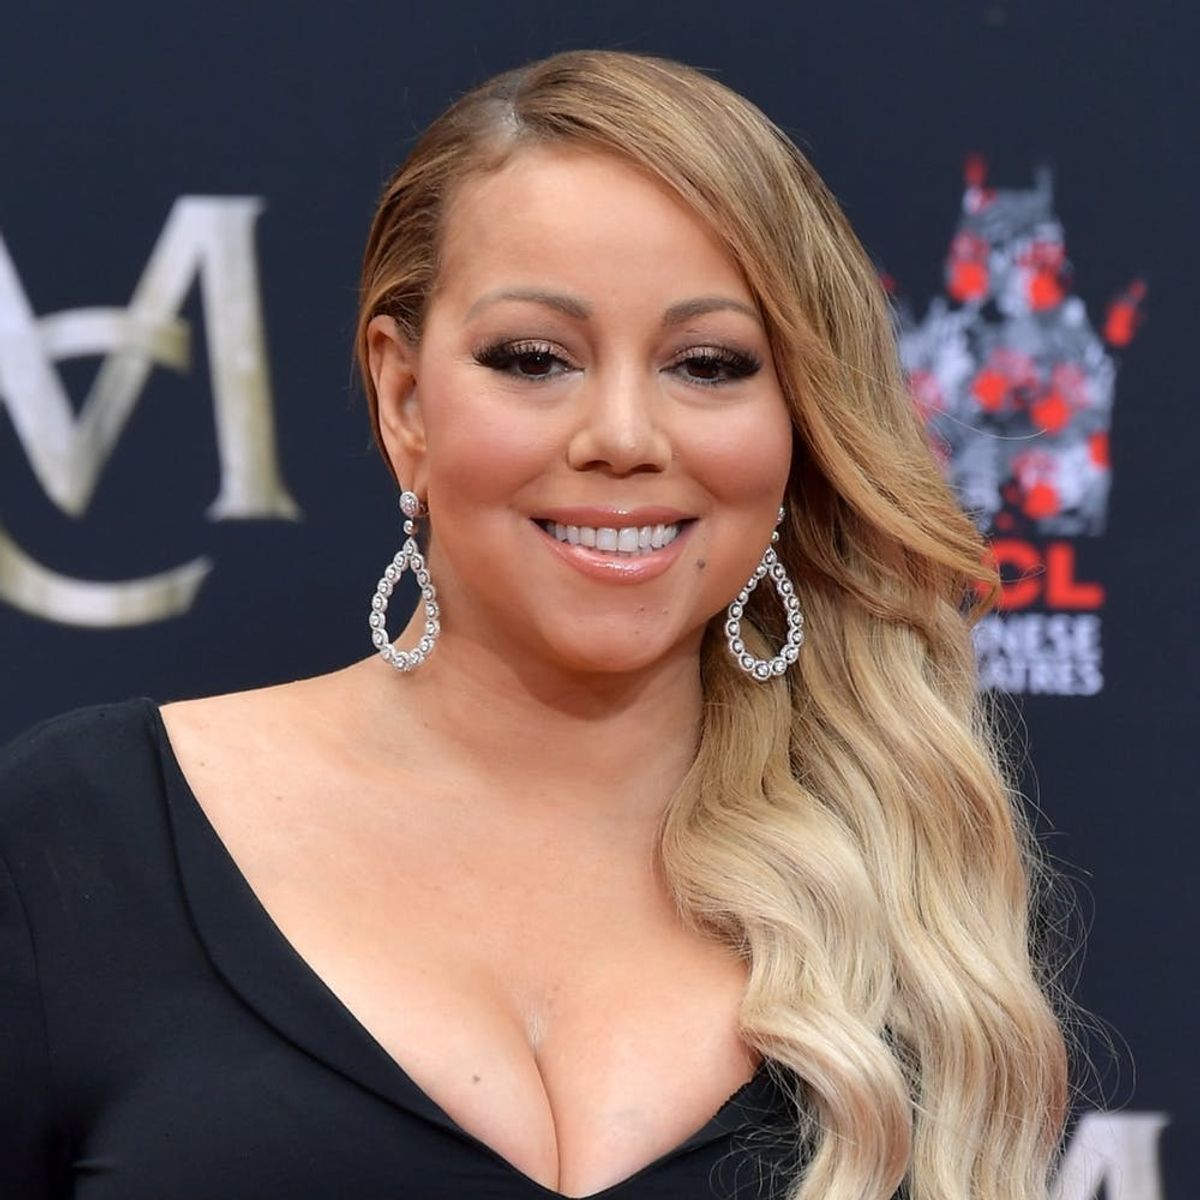 Mariah Carey’s Christmas Tour Has Been Postponed Again Due to Illness